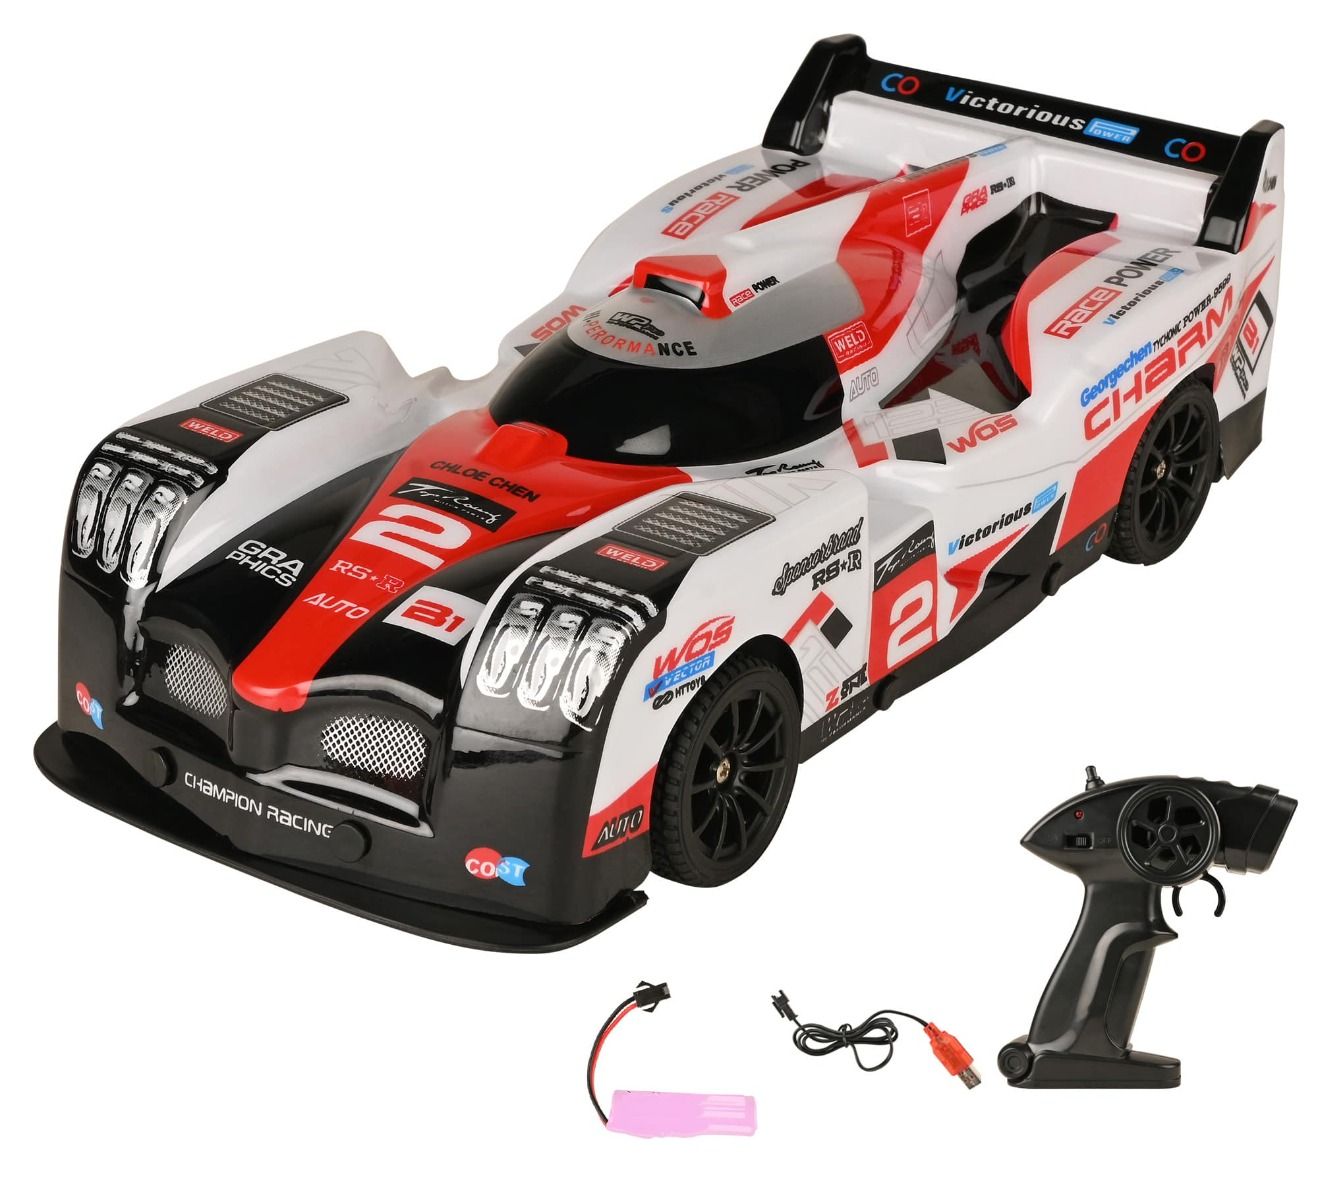 Auto Perfect Racing - RC Car 1:24 - Red | Playzu